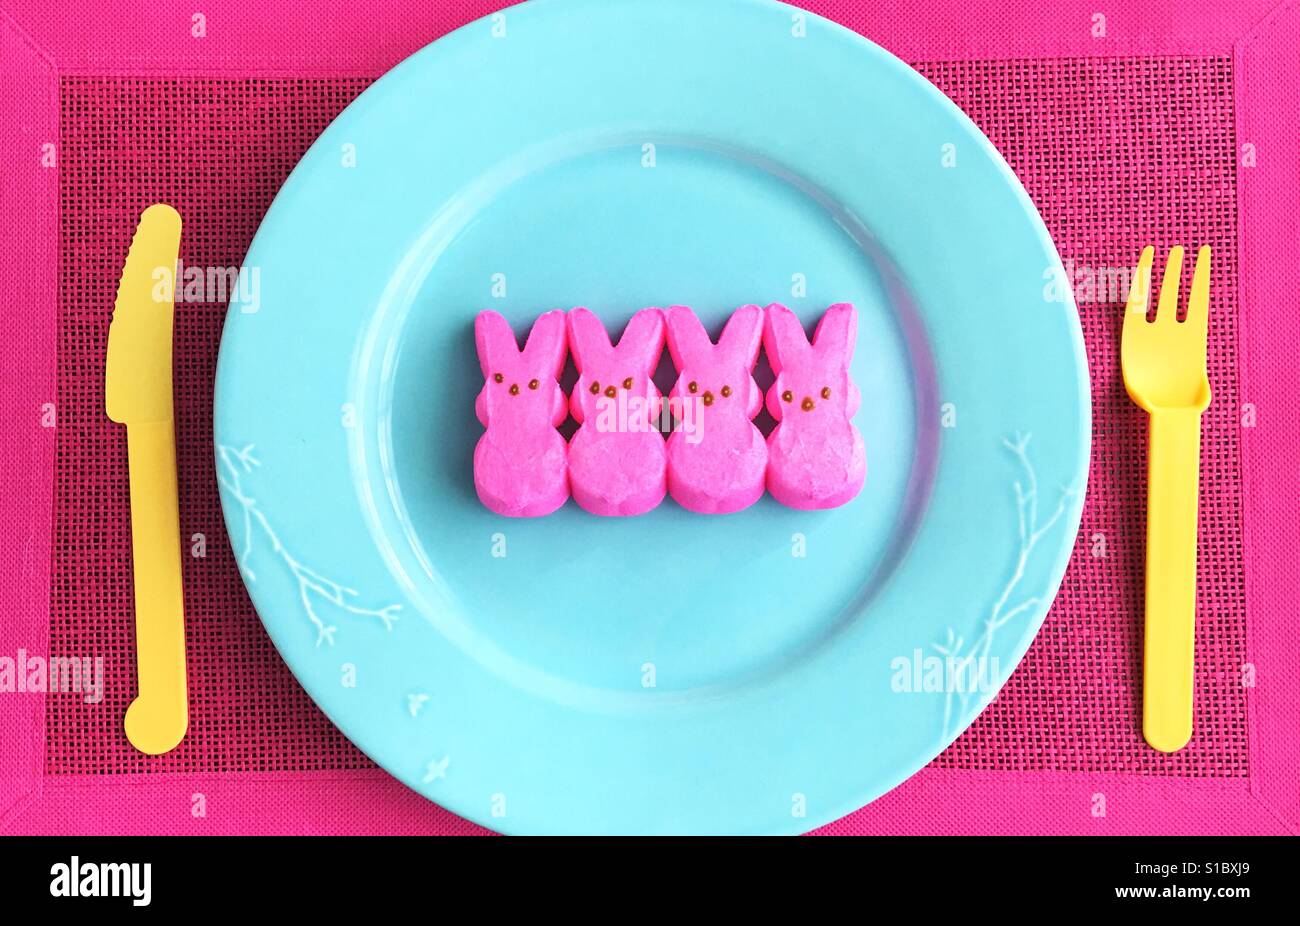 Peeps bunnies on a plate. Stock Photo